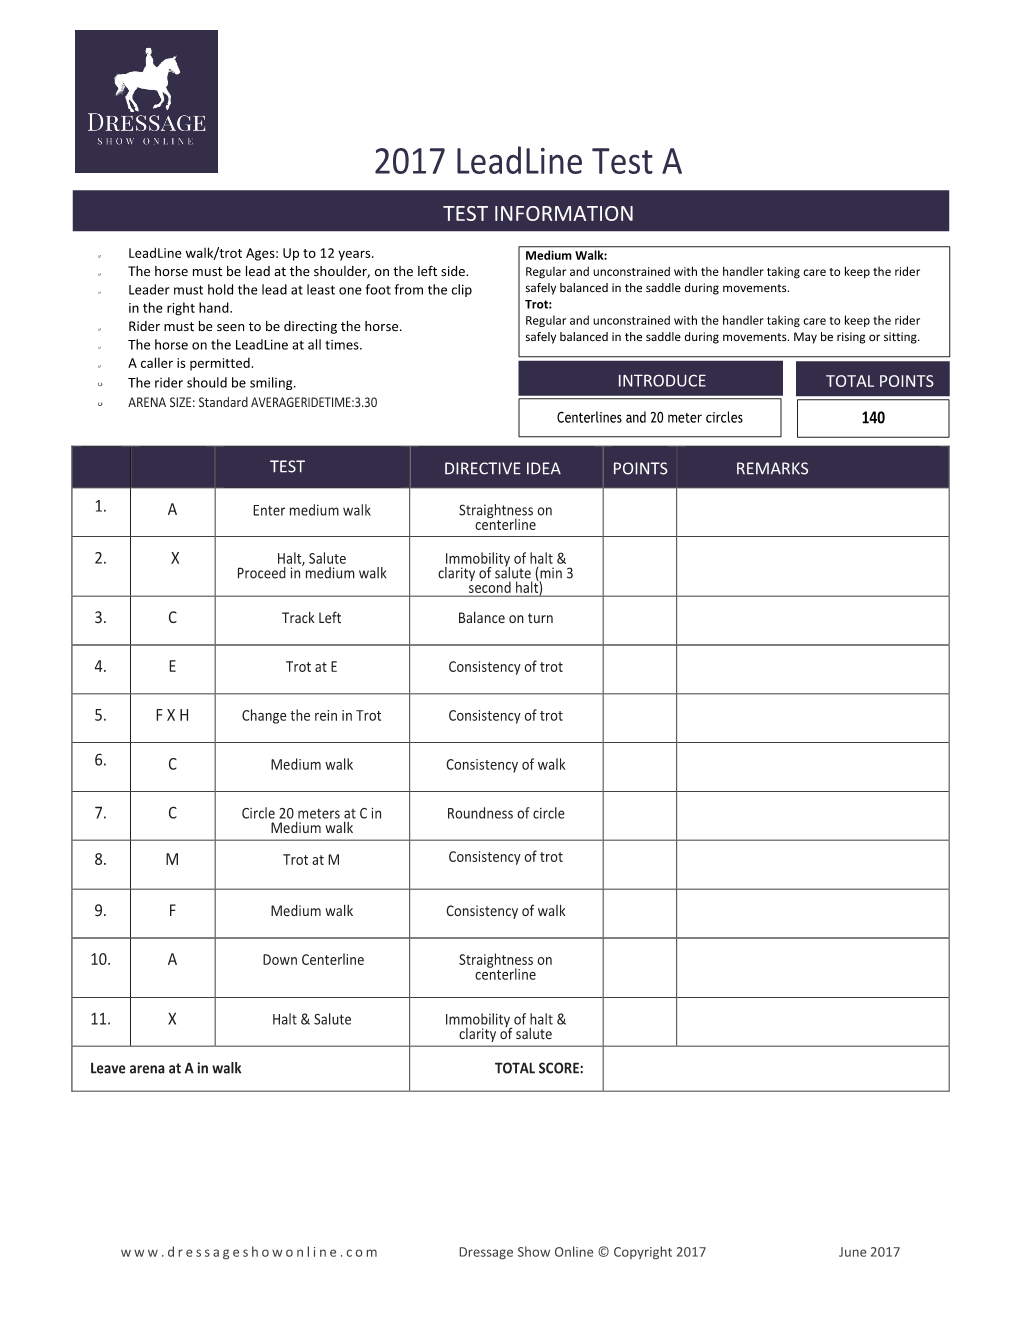 2017 Leadline Test a TEST INFORMATION